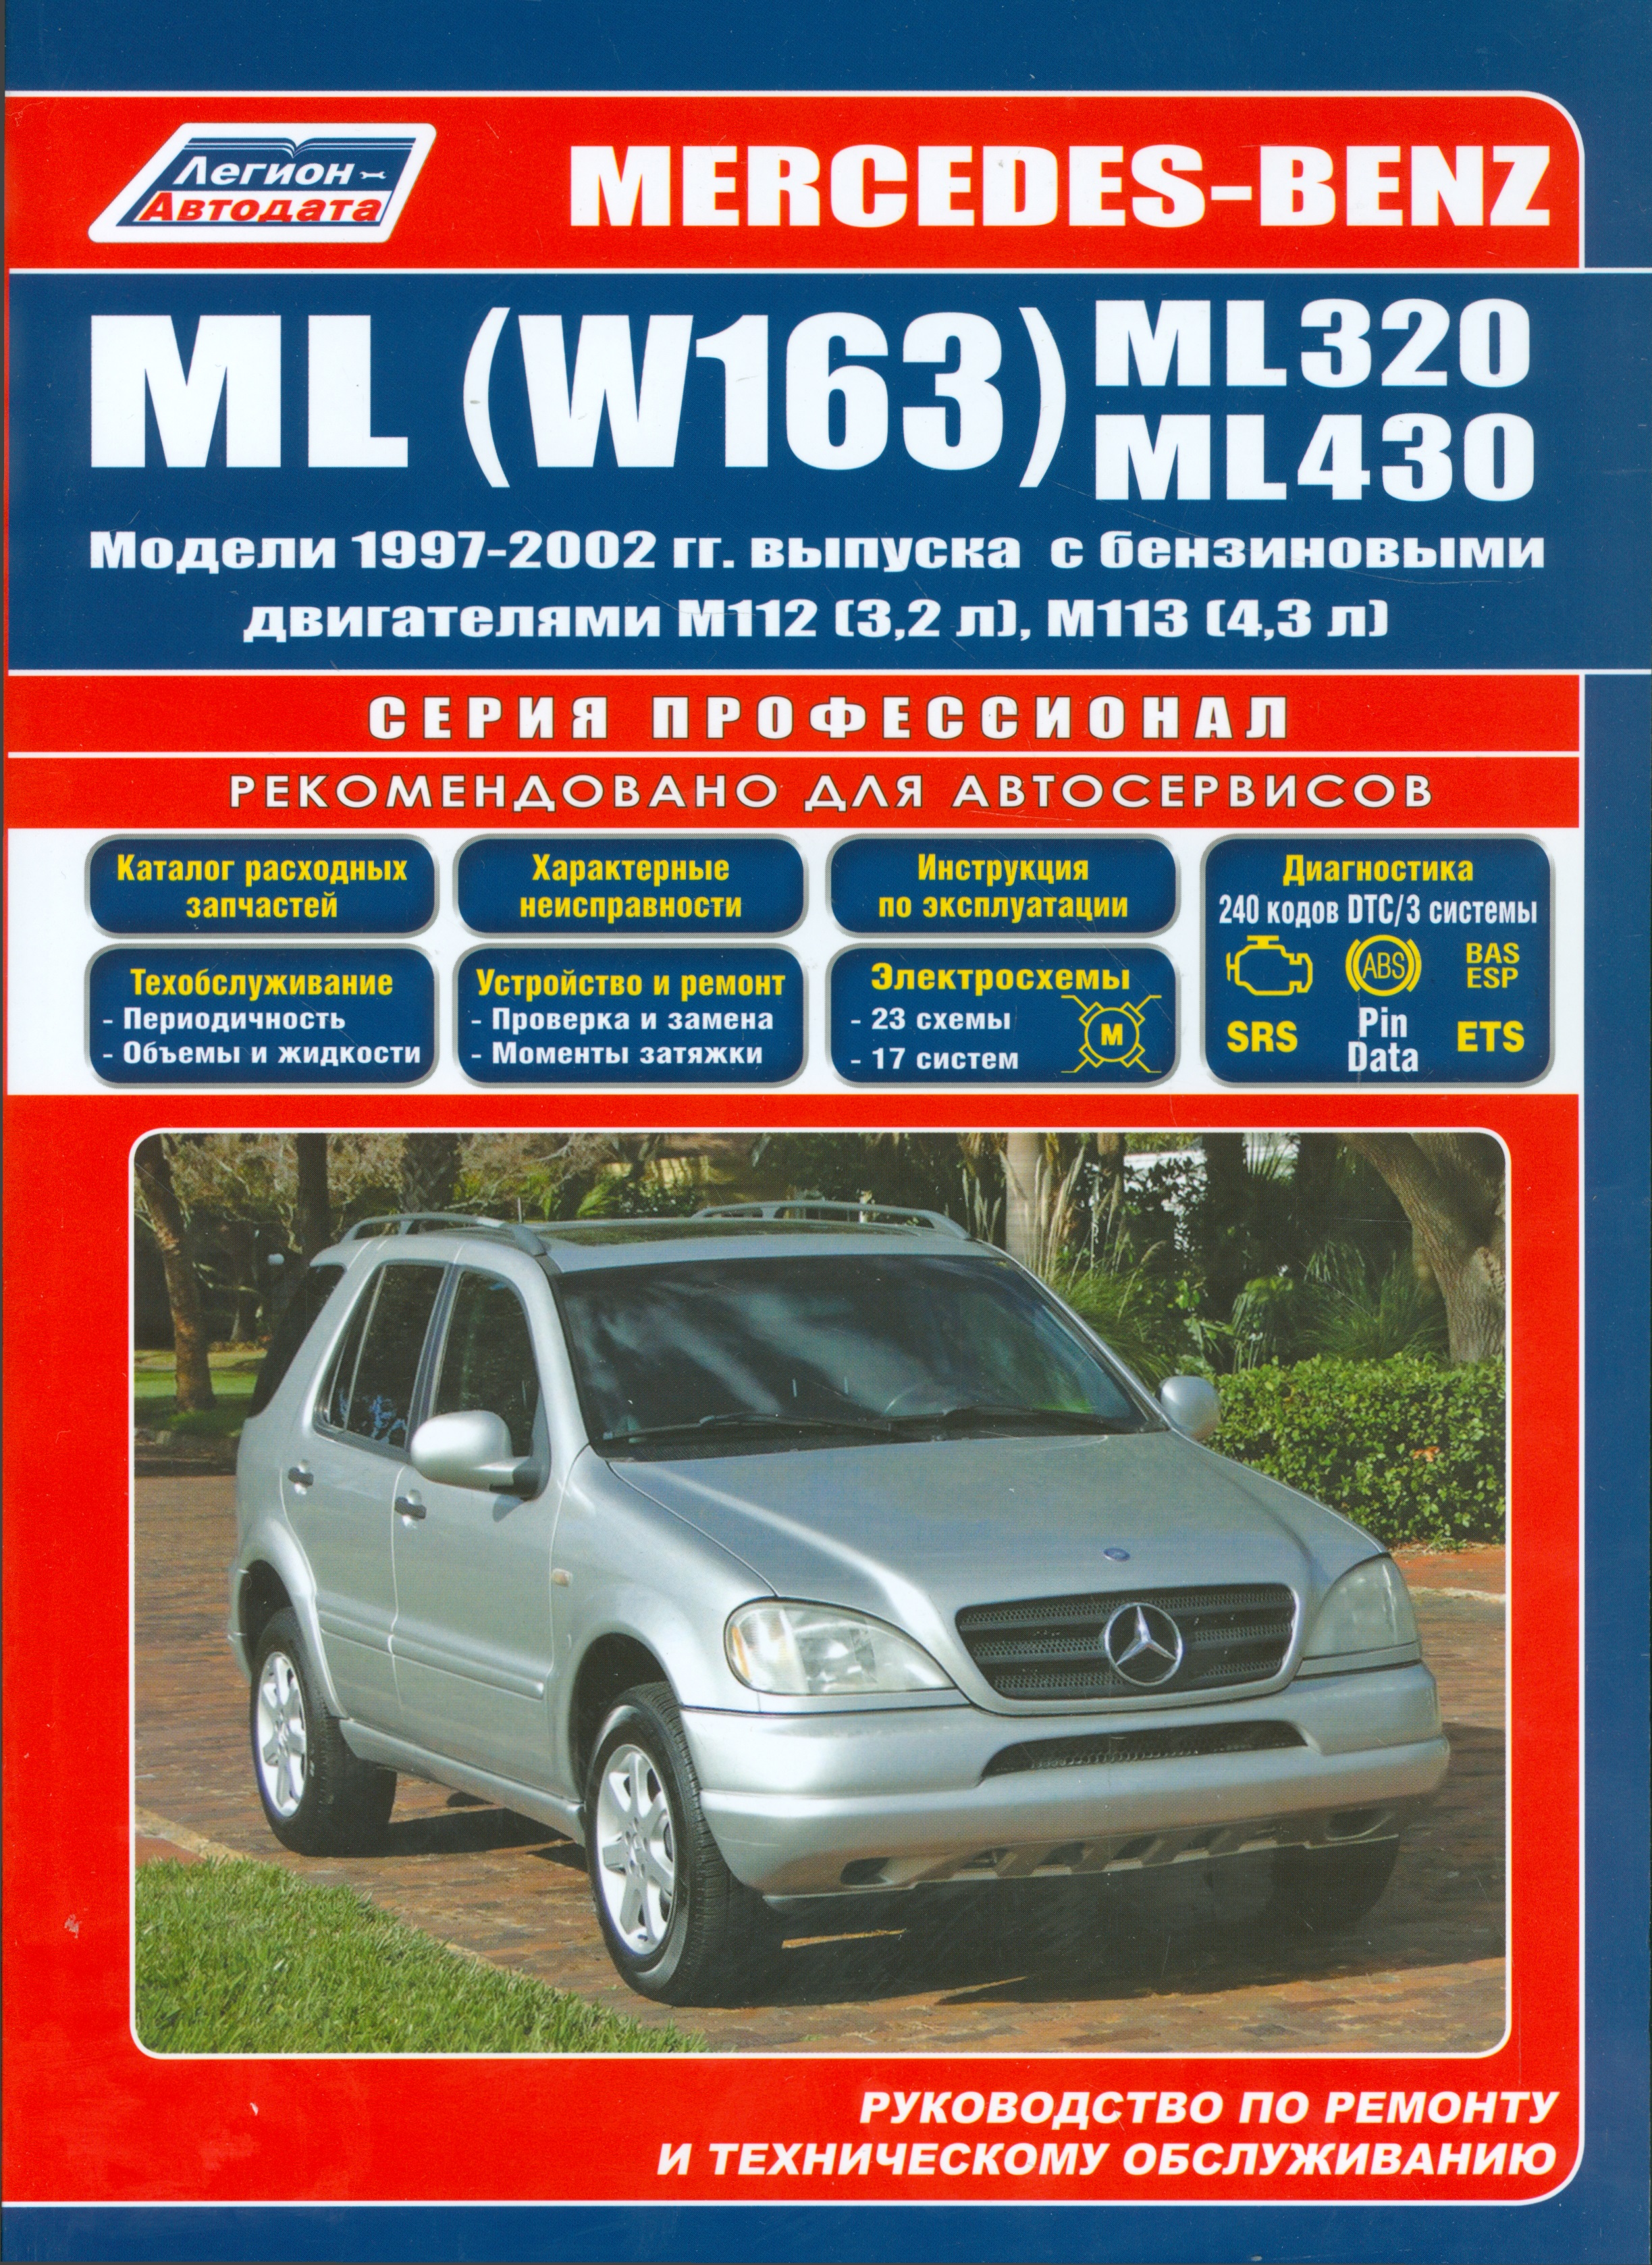 Mercedes-Benz ML (W163) ML320 ML430 Мод. 1997-2002 гг. вып. С бенз. (мПрофессионал) mercedes benz windshield washer liquid tank ml320 ml350 ml430 w163 1998 2006 1998